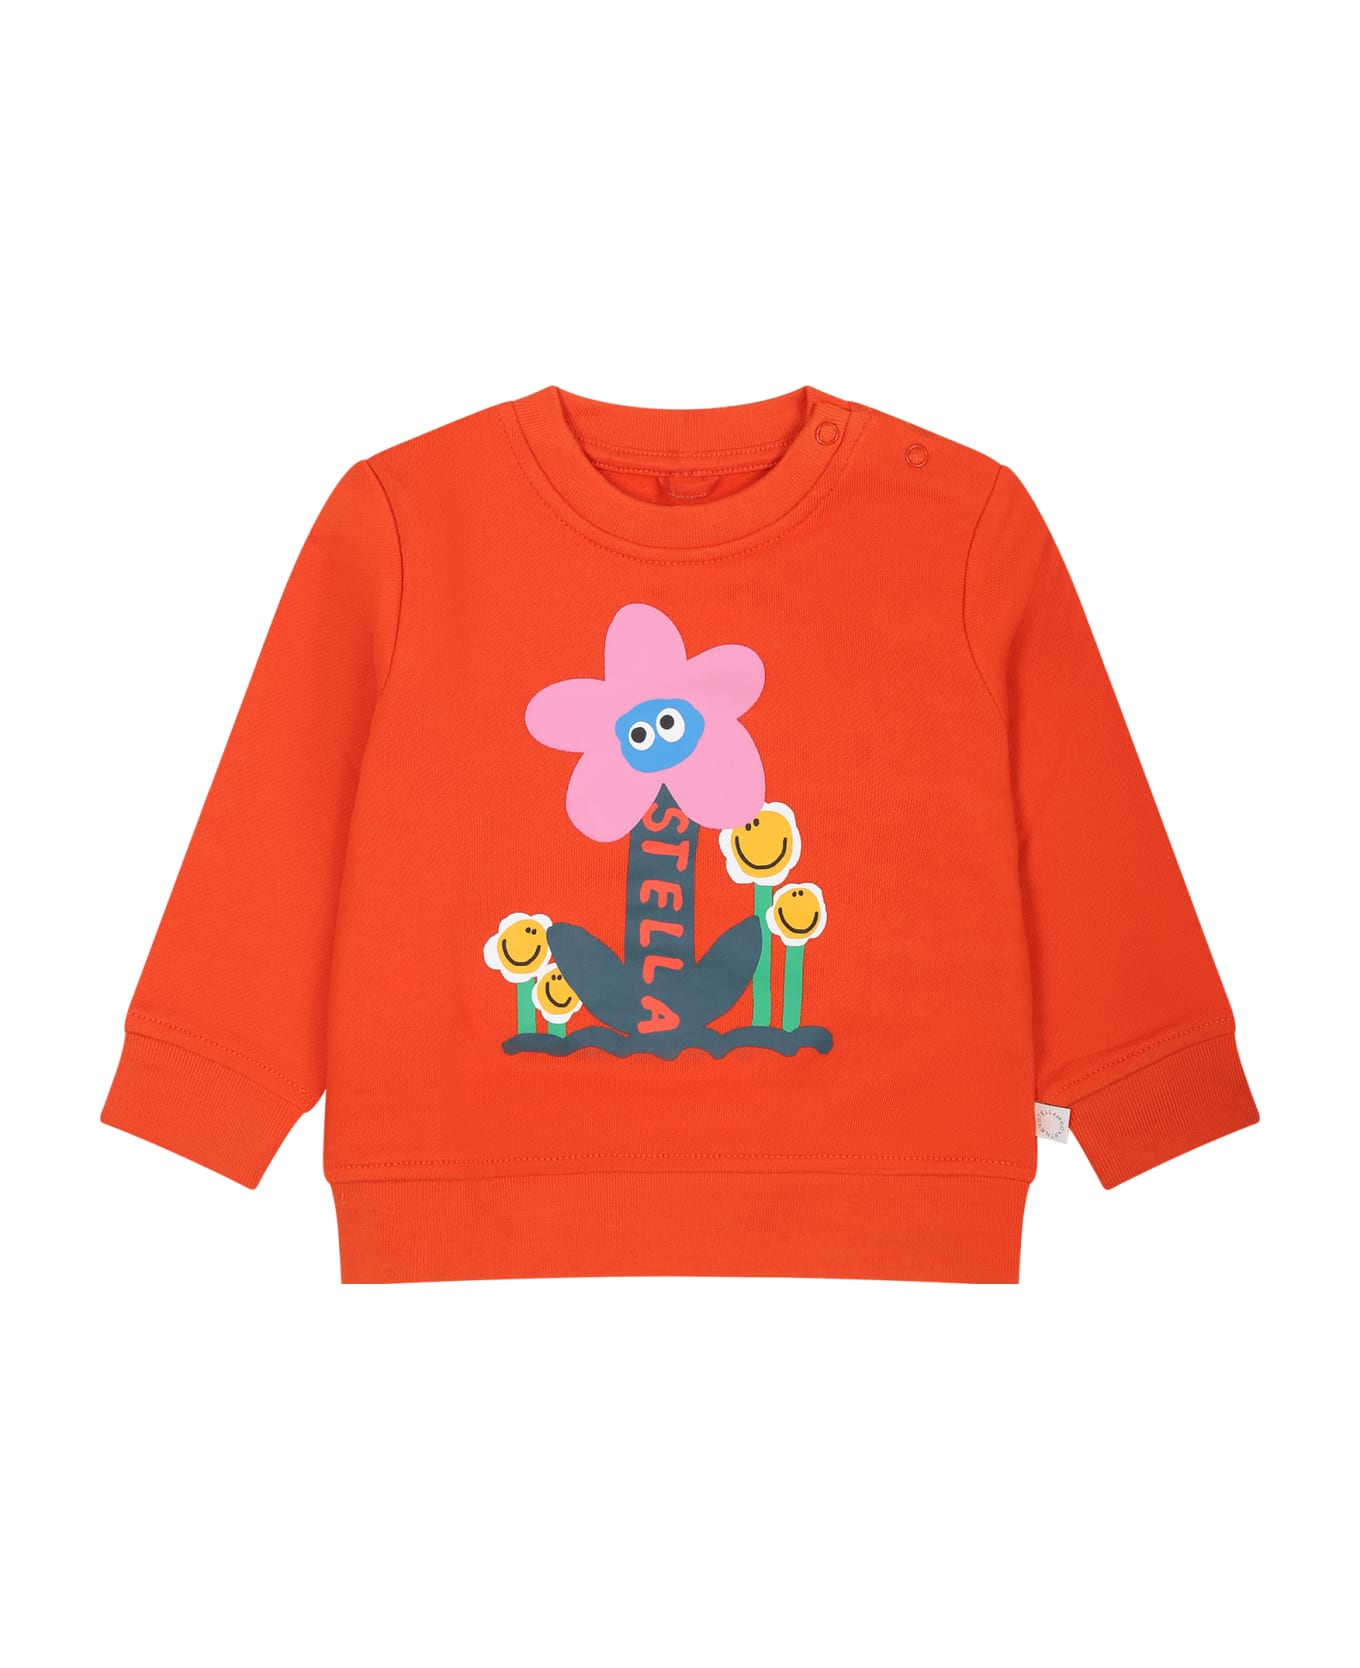 Stella McCartney Kids Orange Sweatshirt For Baby Girl With Flowesr And Logo - Orange ニットウェア＆スウェットシャツ